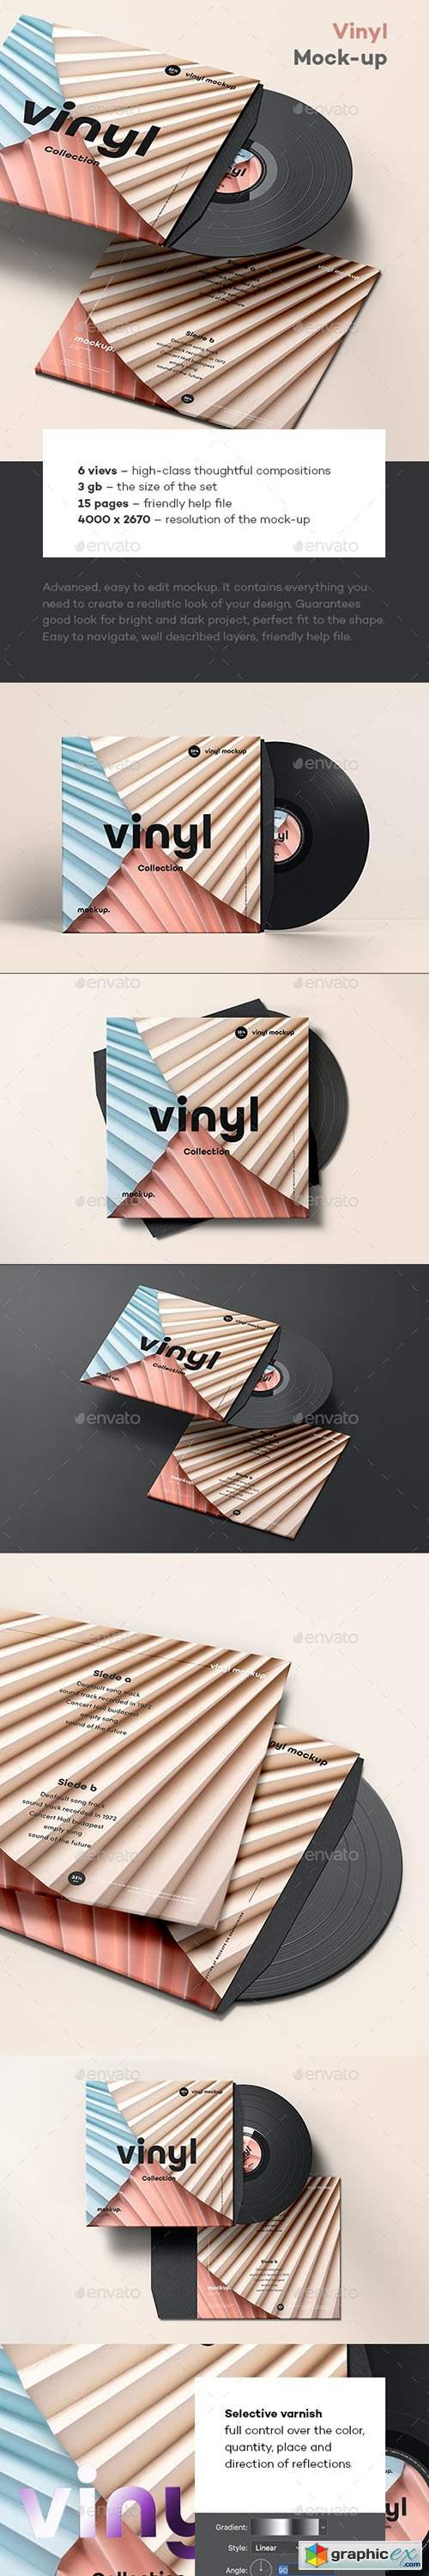 Vinyl Mock-up 5 